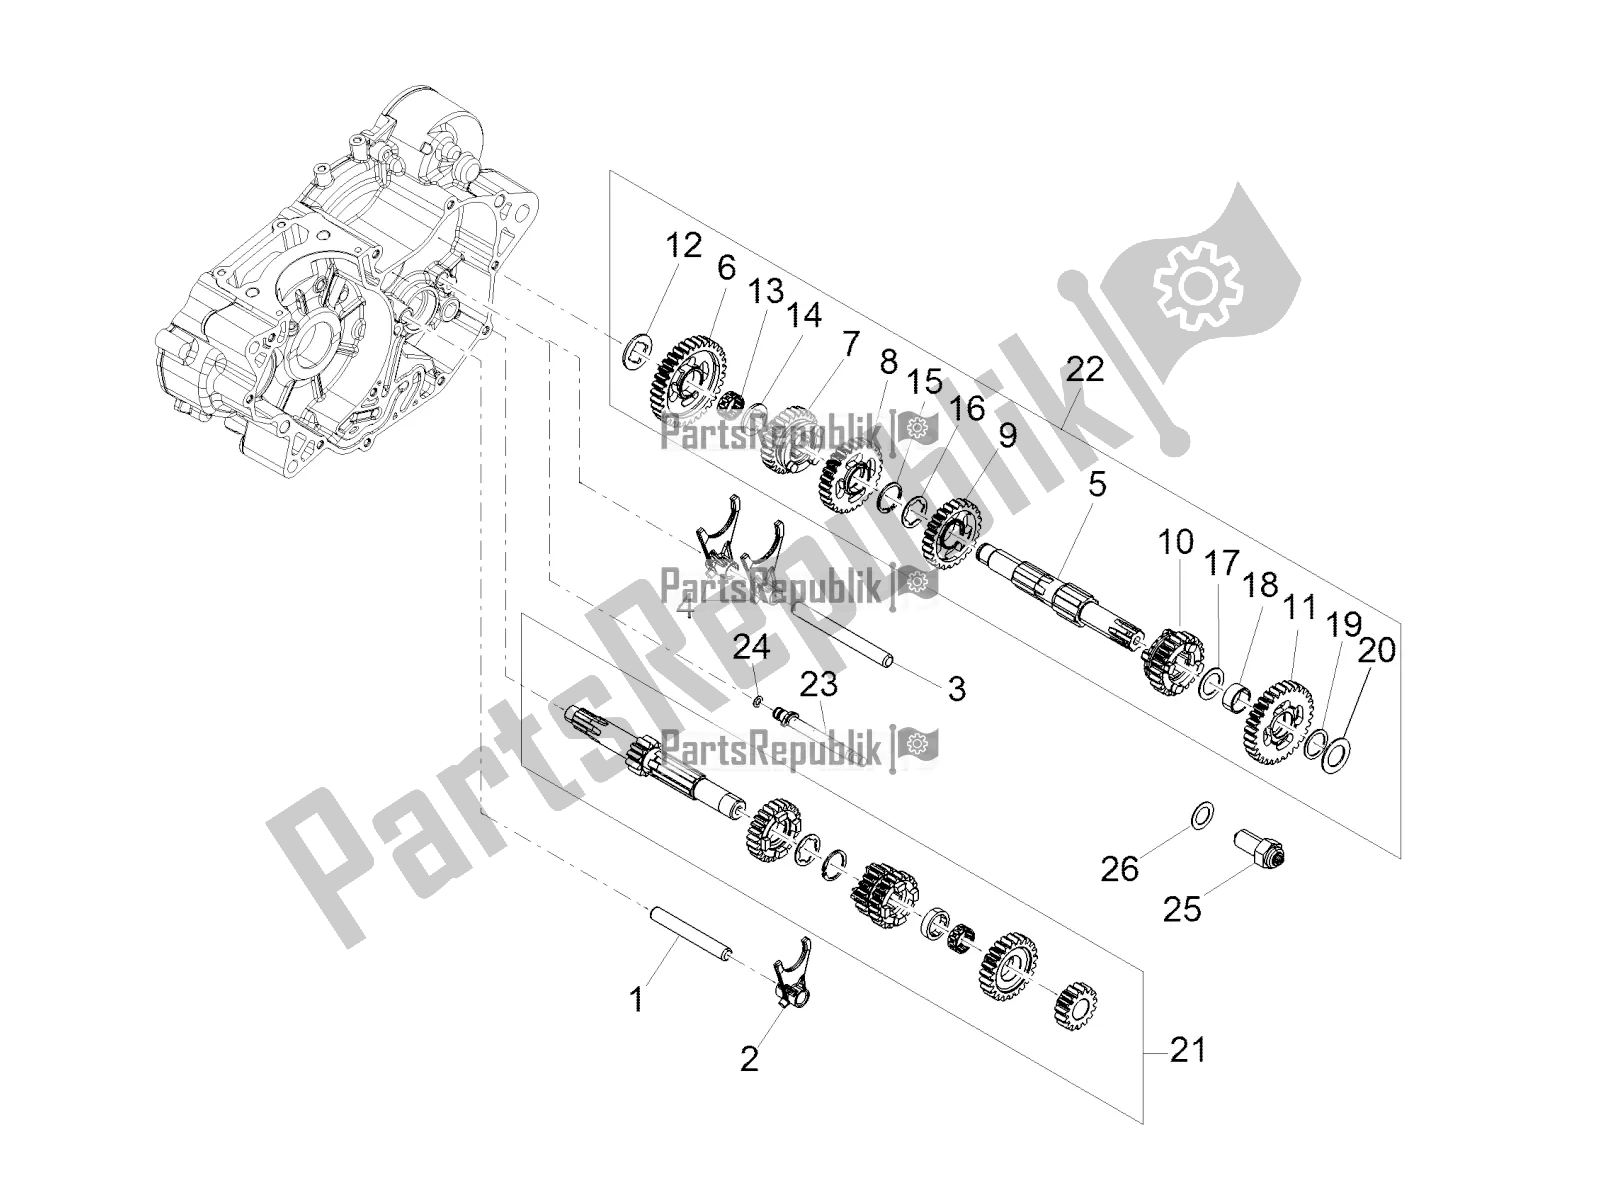 All parts for the Gear Box - Gear Assembly of the Aprilia Tuono 125 2022